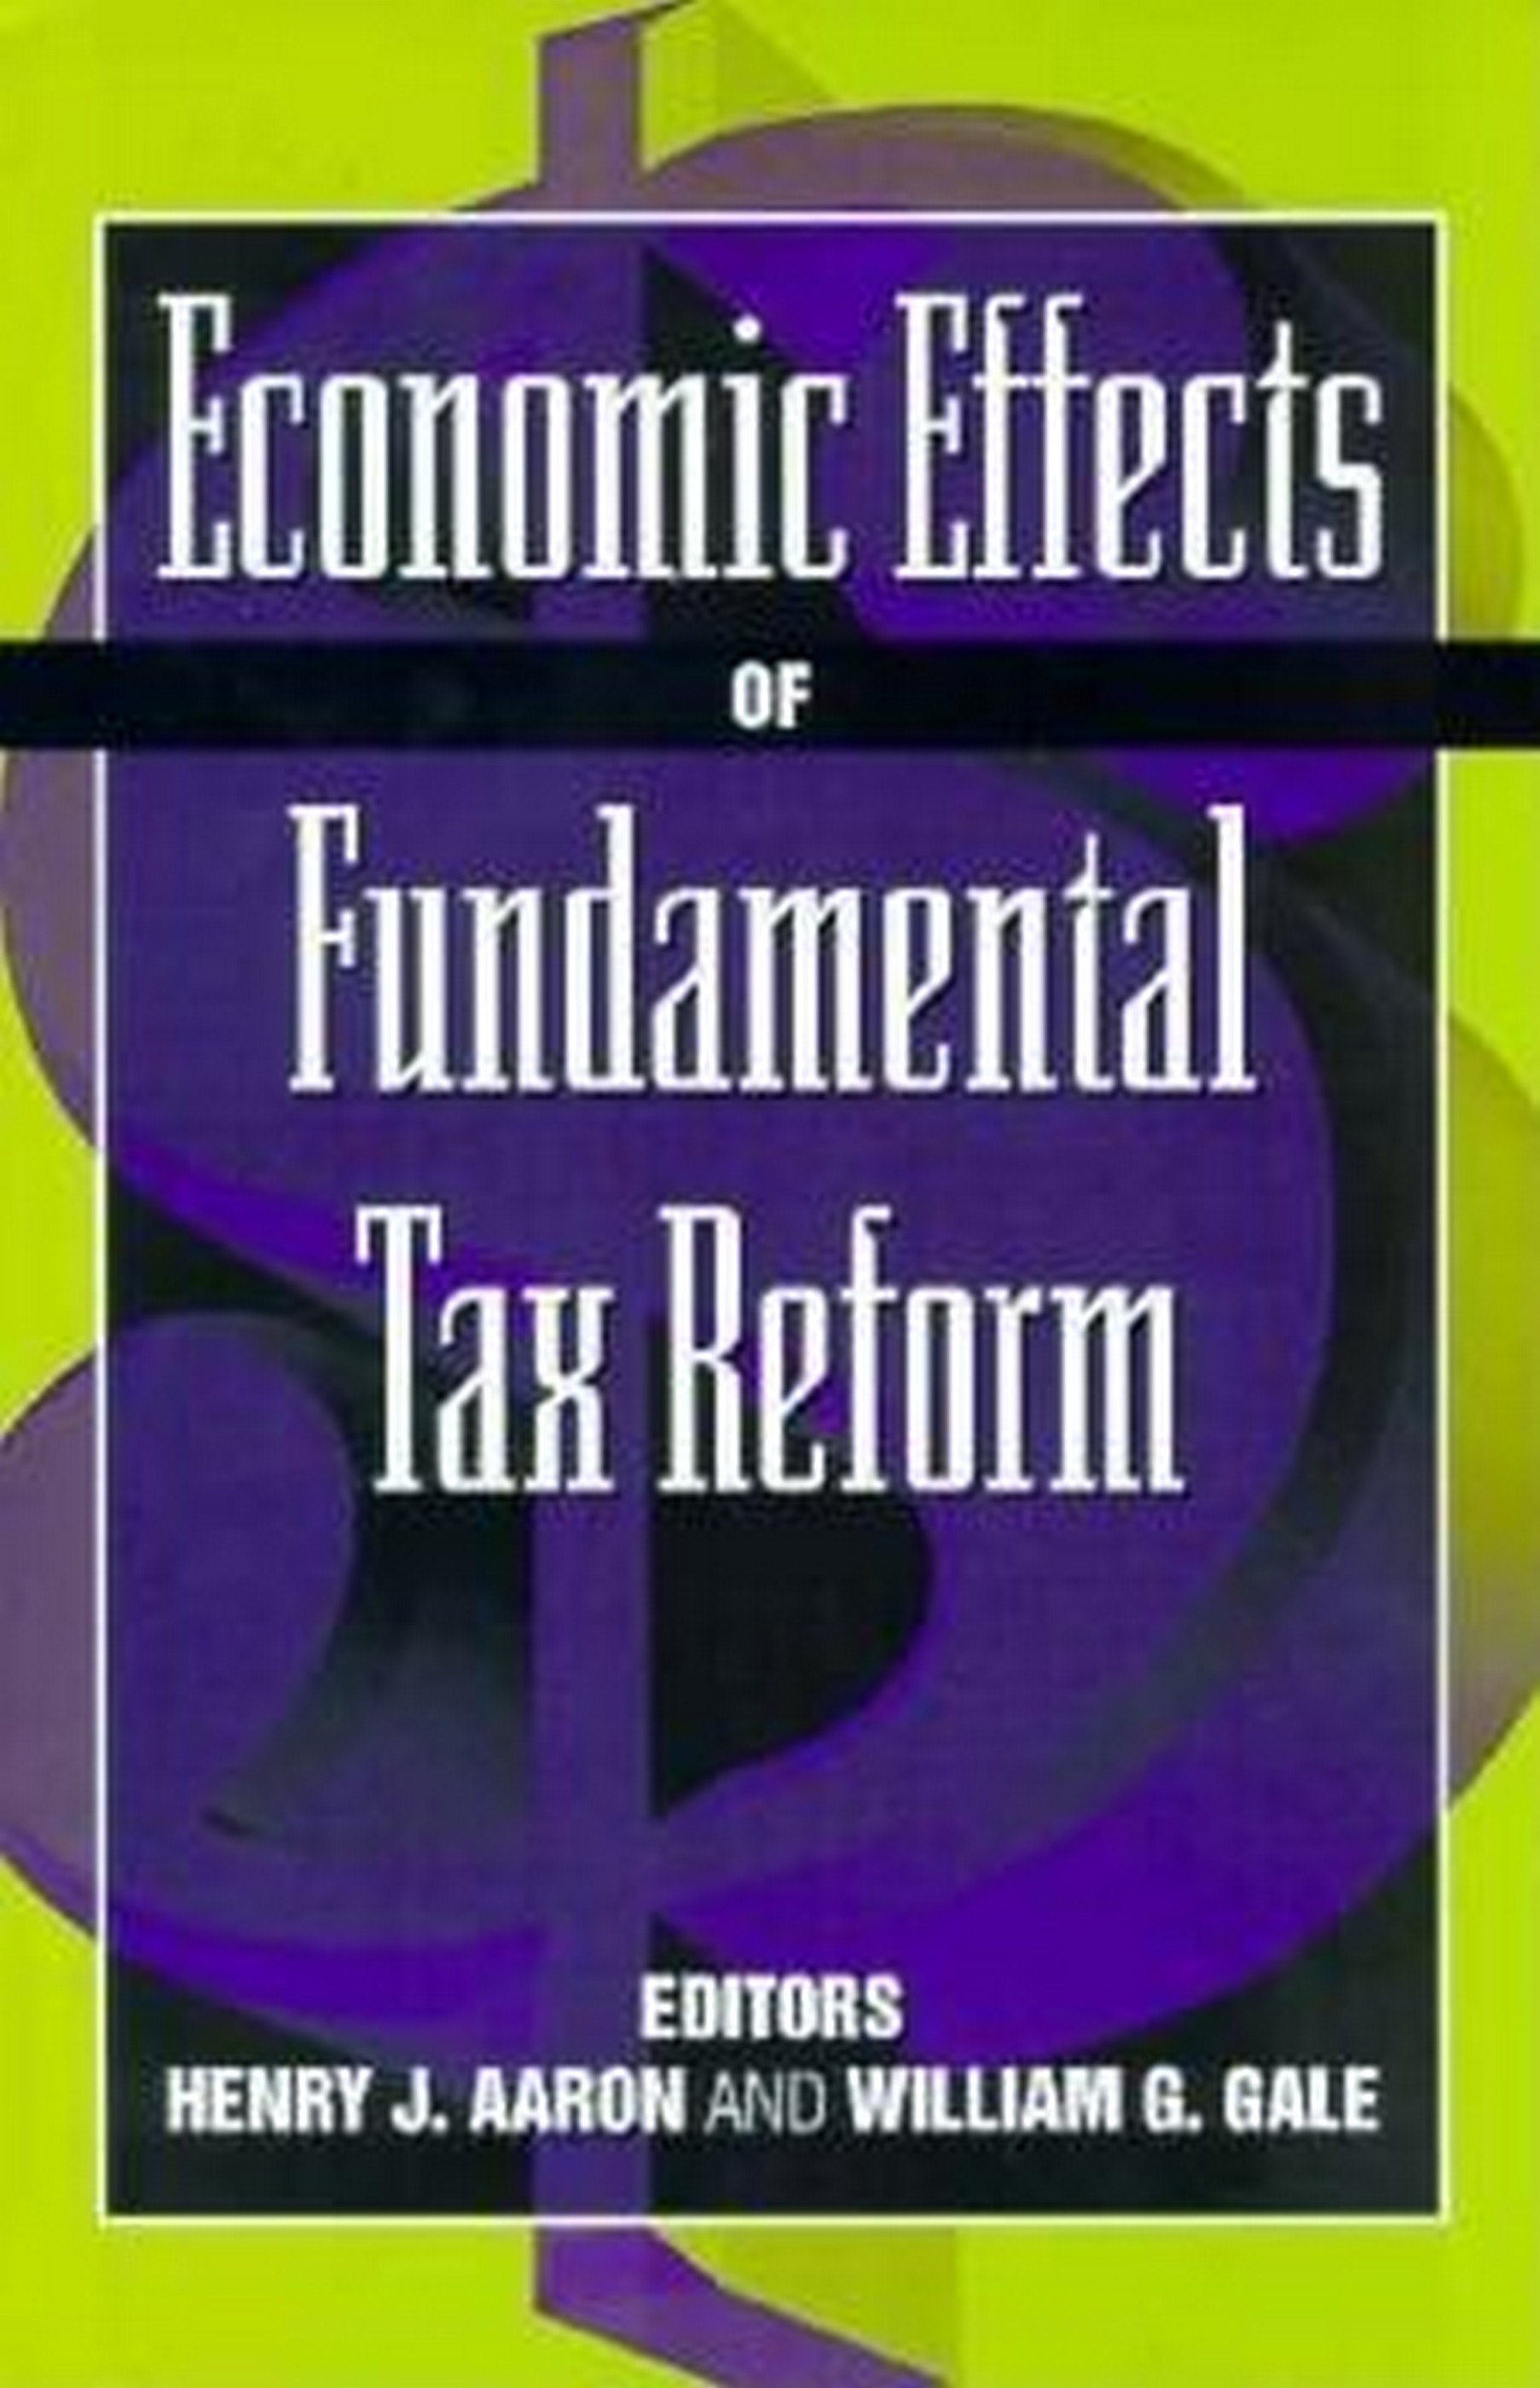 Economic Effects of Fundamental Tax Reform